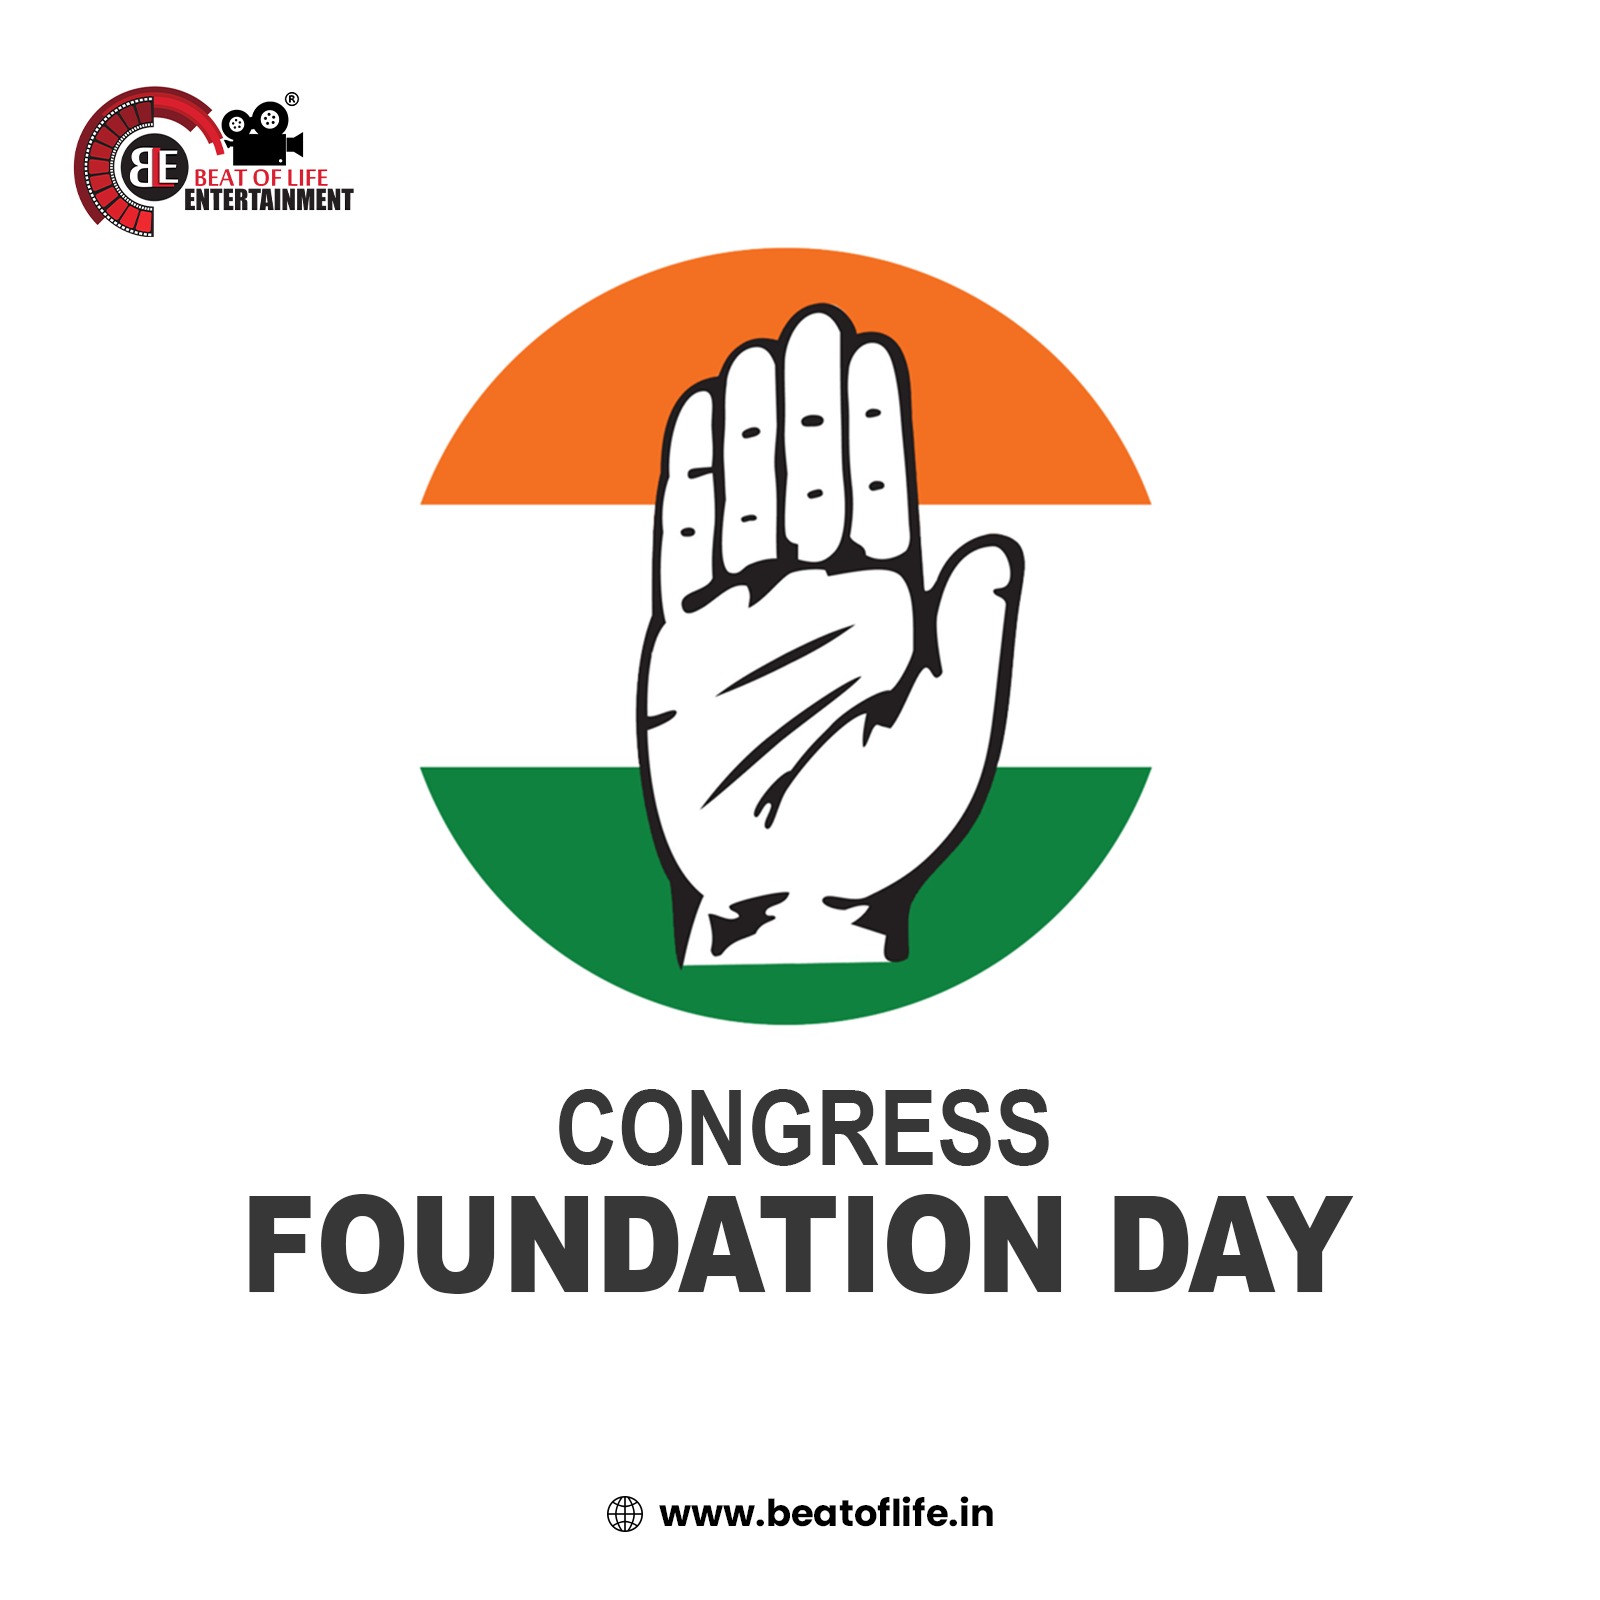 Congress Foundation Day